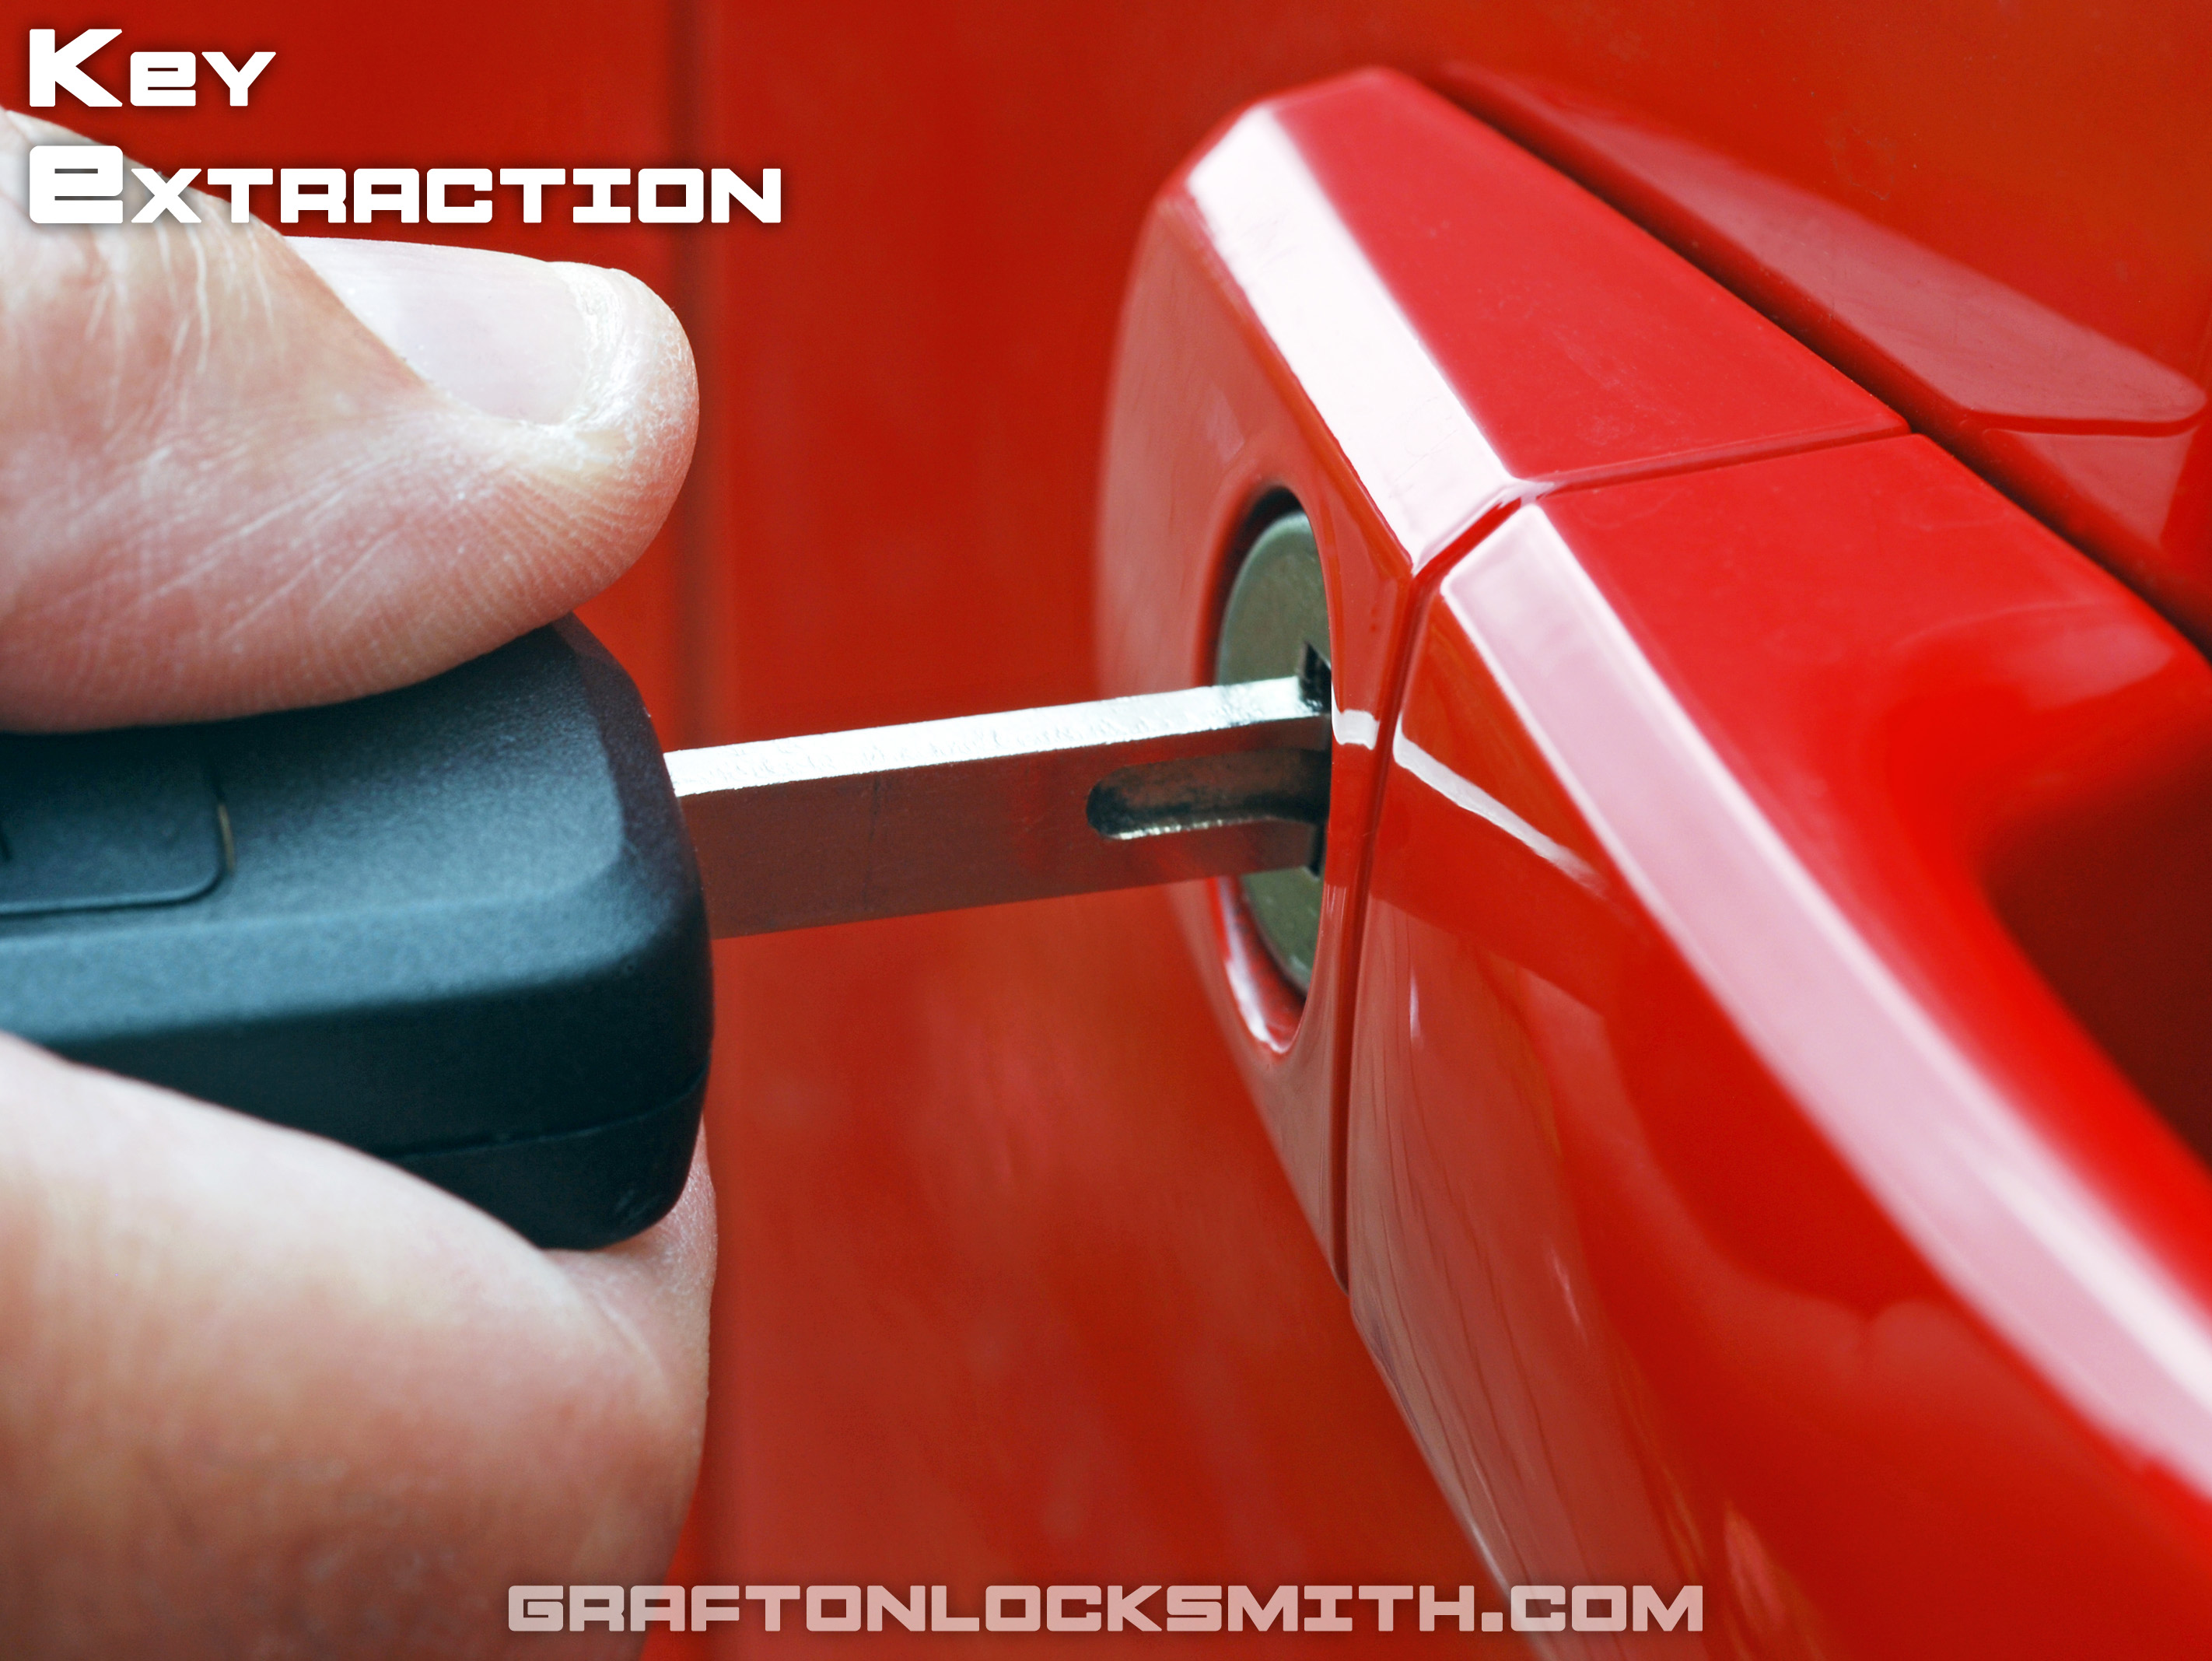 Grafton-locksmith-key-extraction